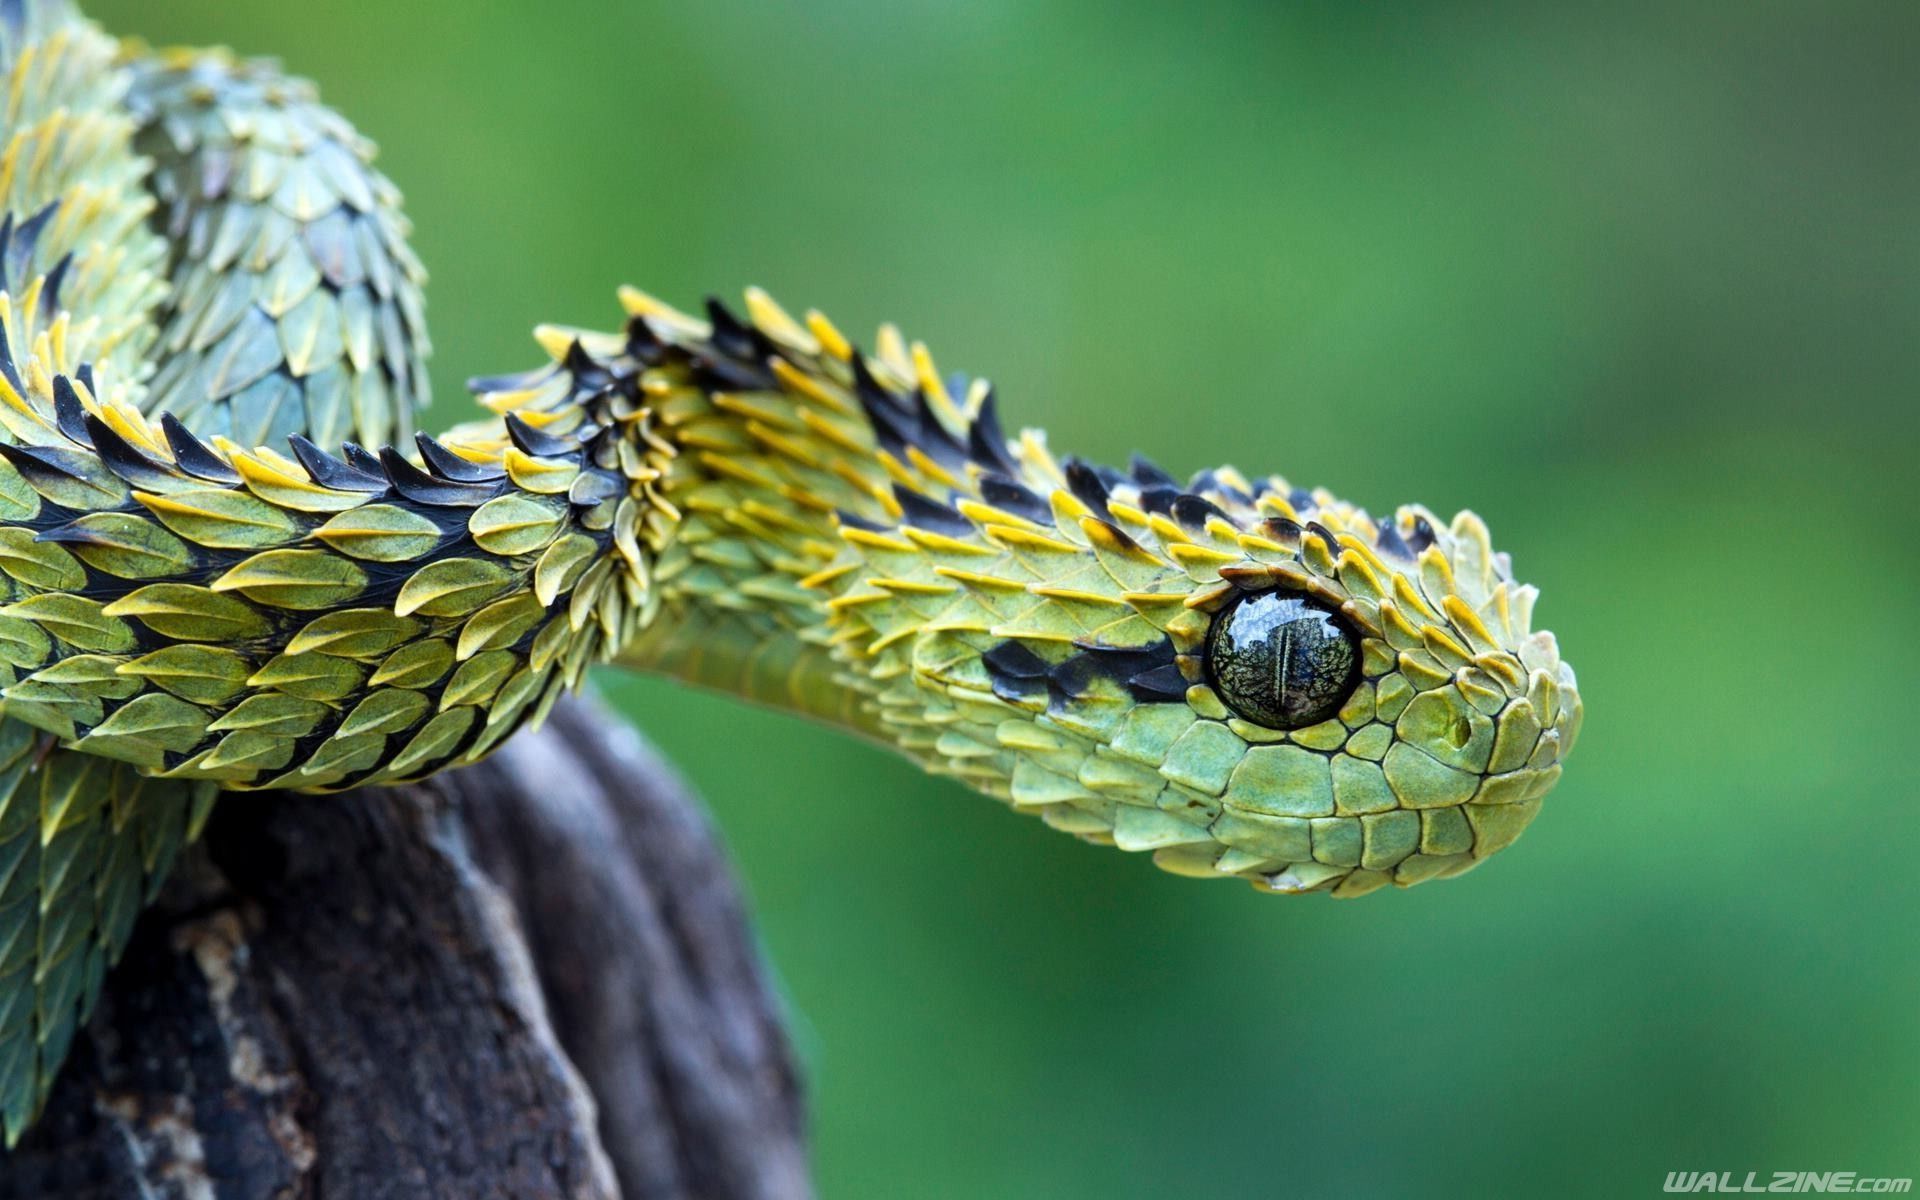 Bush Viper Snake HD Desktop Wallpaper. Wallzine.com. Gruslige tiere, Schöne schlangen, Tiere